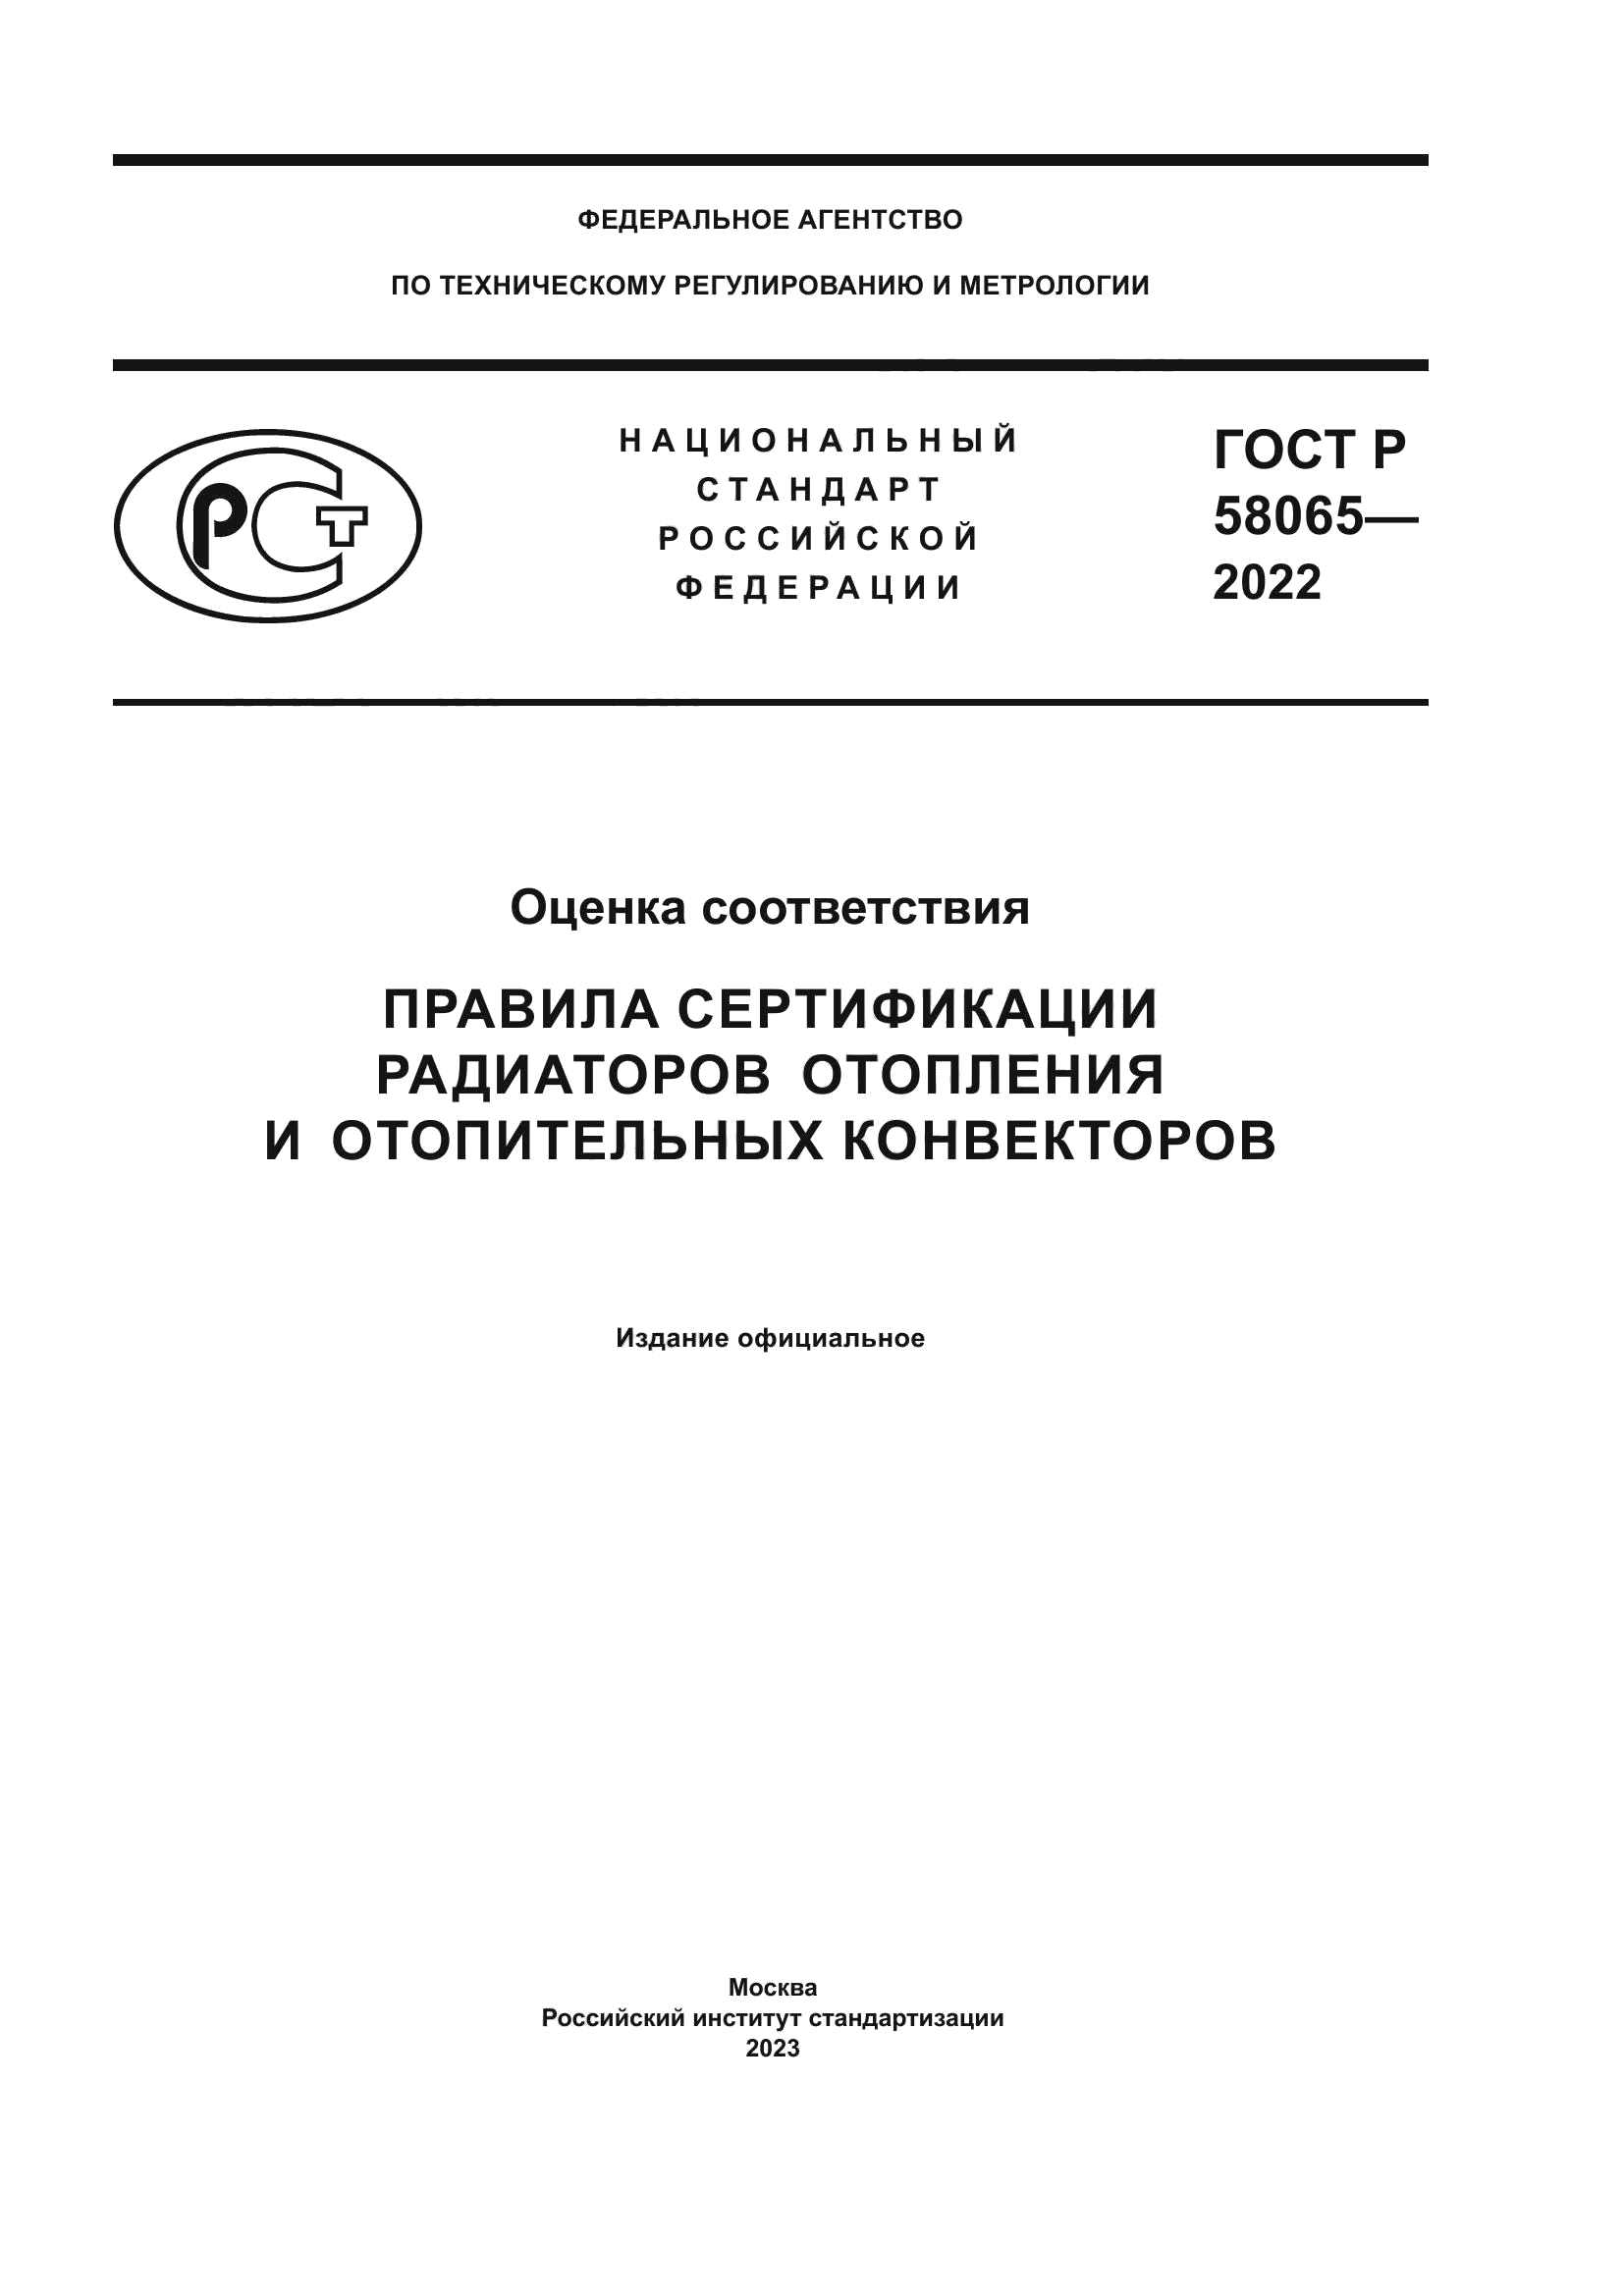 ГОСТ Р 58065-2022